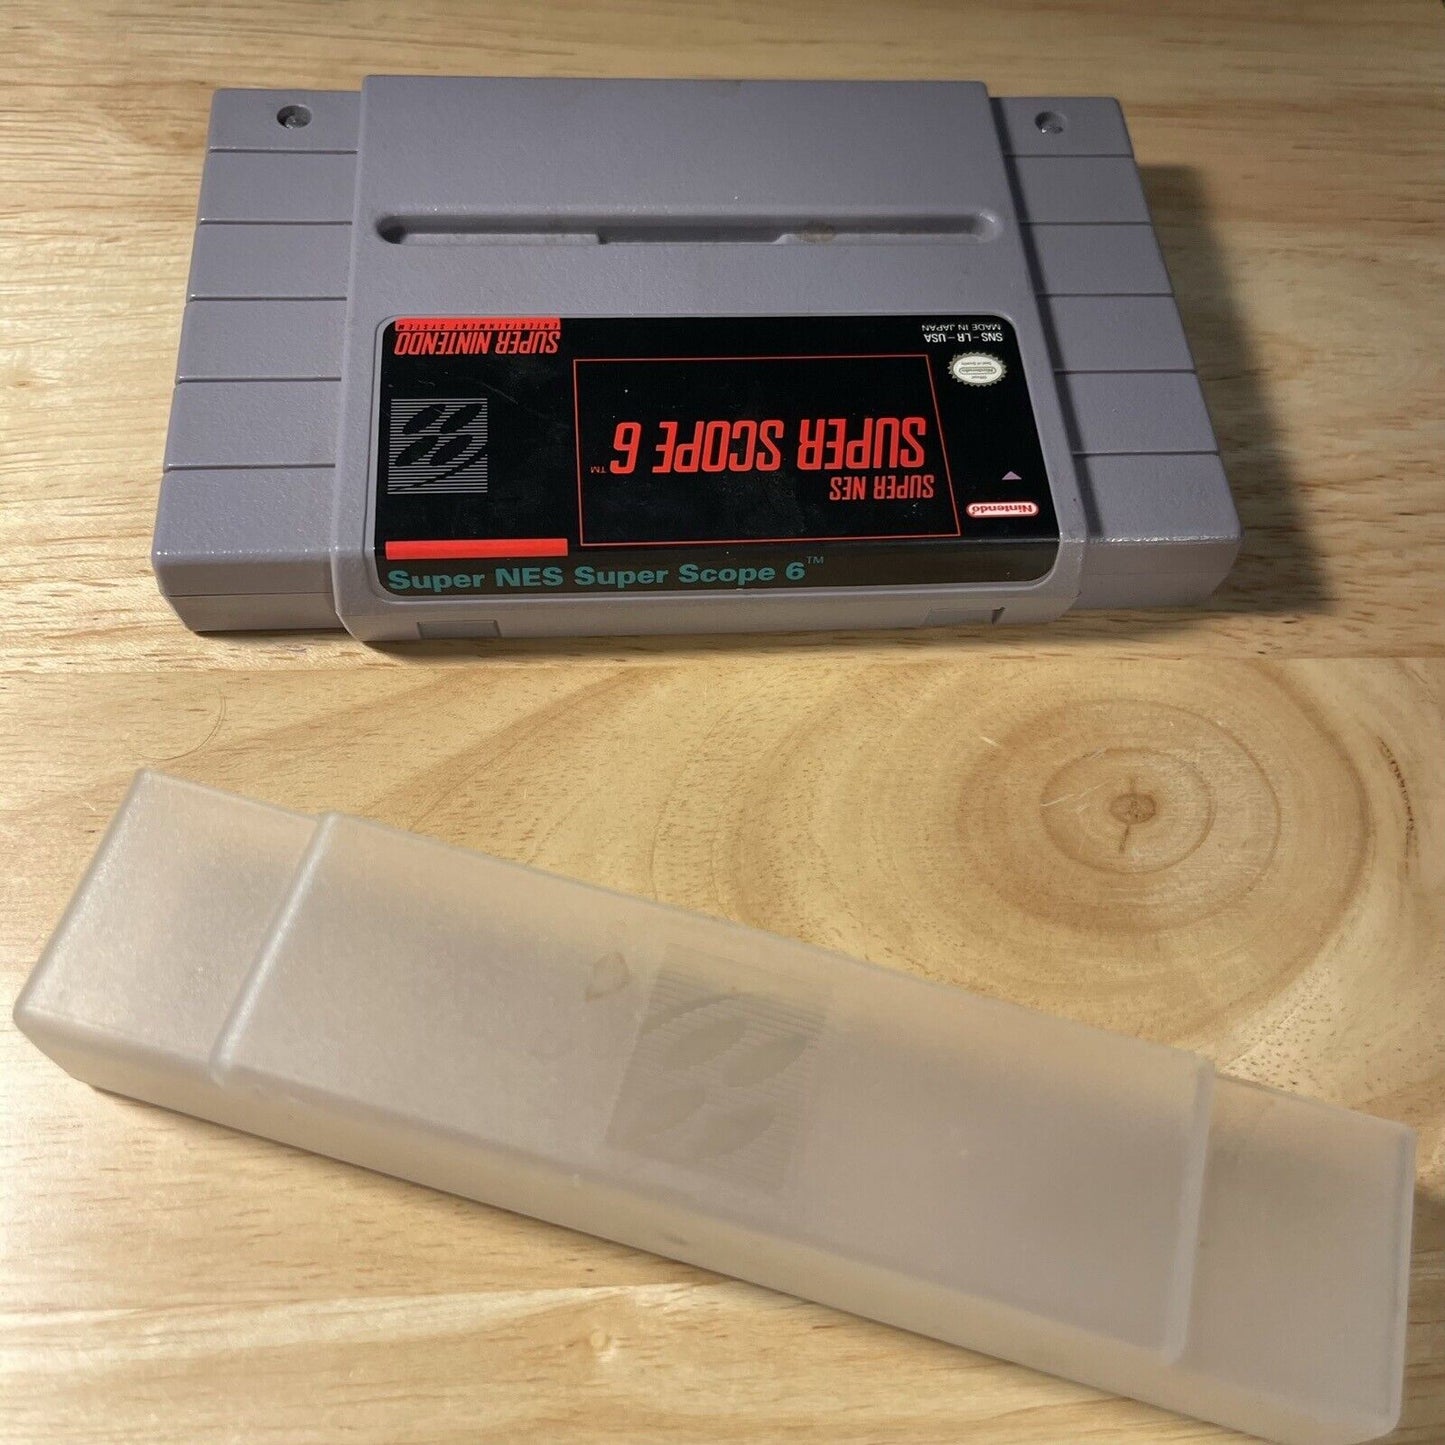 Super Scope 6 (Super Nintendo, SNES) - Tested Working